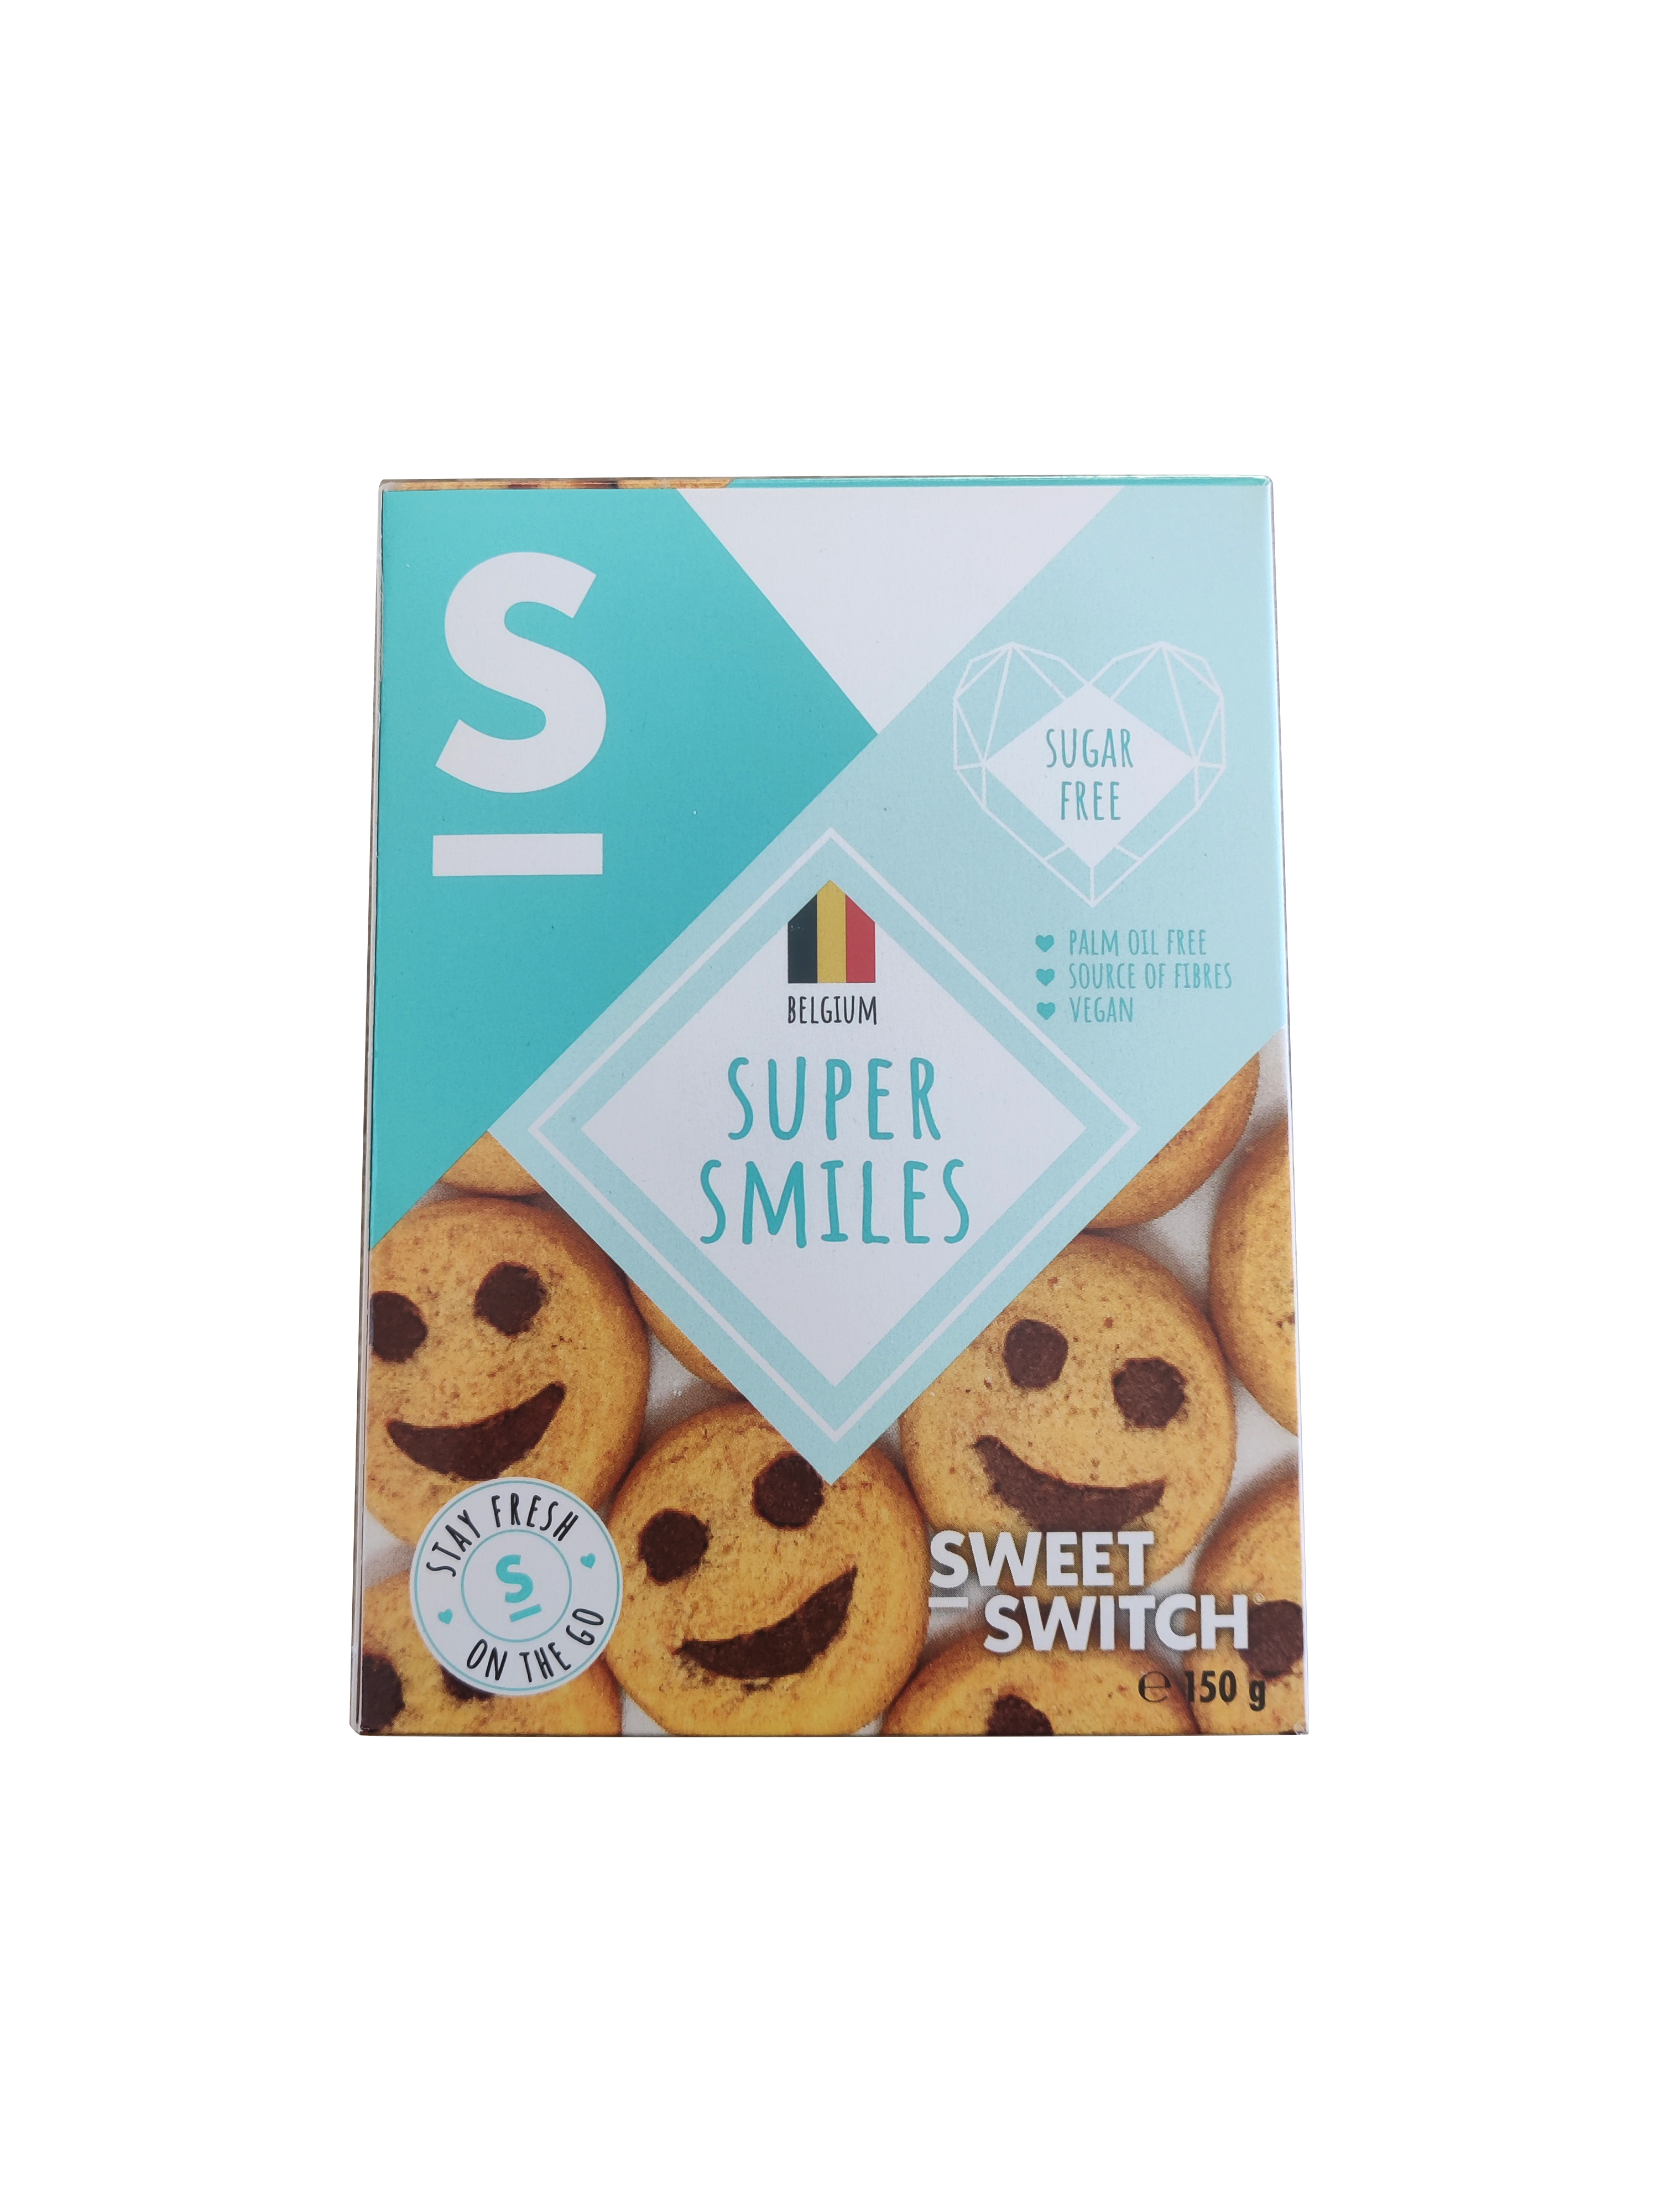 031 Super Smiles product shot front